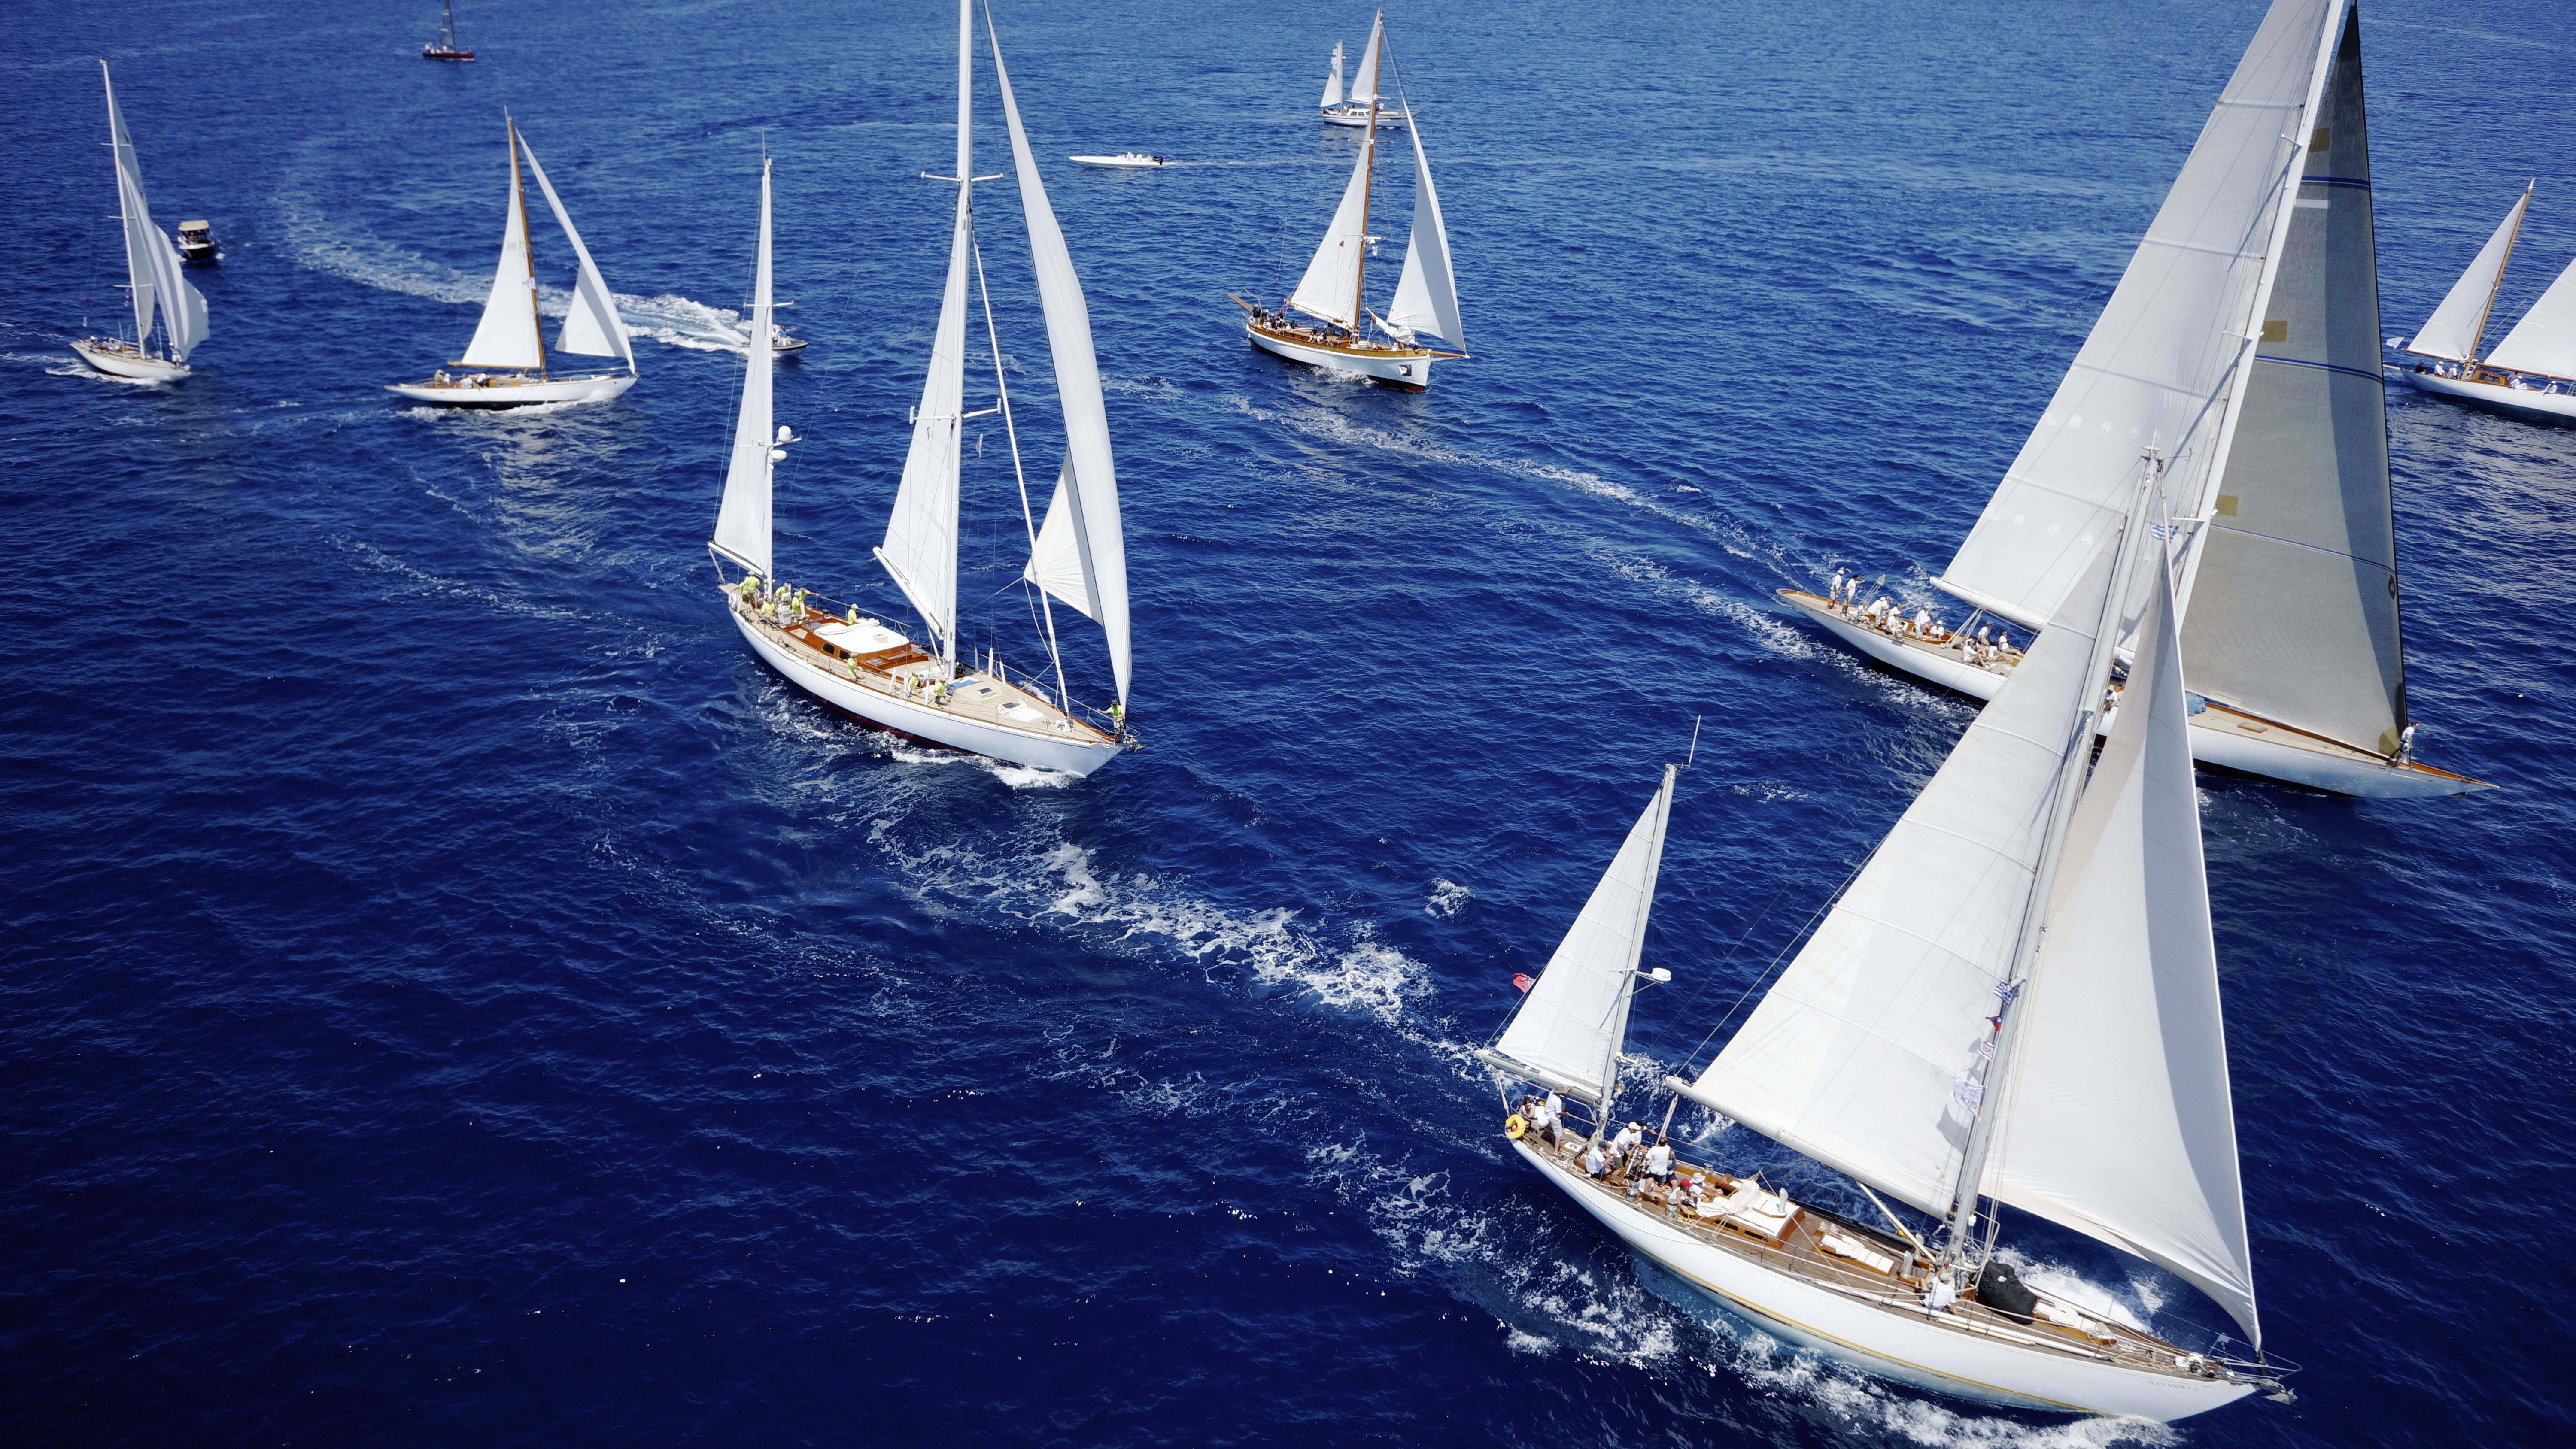 Spetses Classic Yacht Race 2014: ομαδικό πνεύμα και ευ αγωνίζεσθαι!